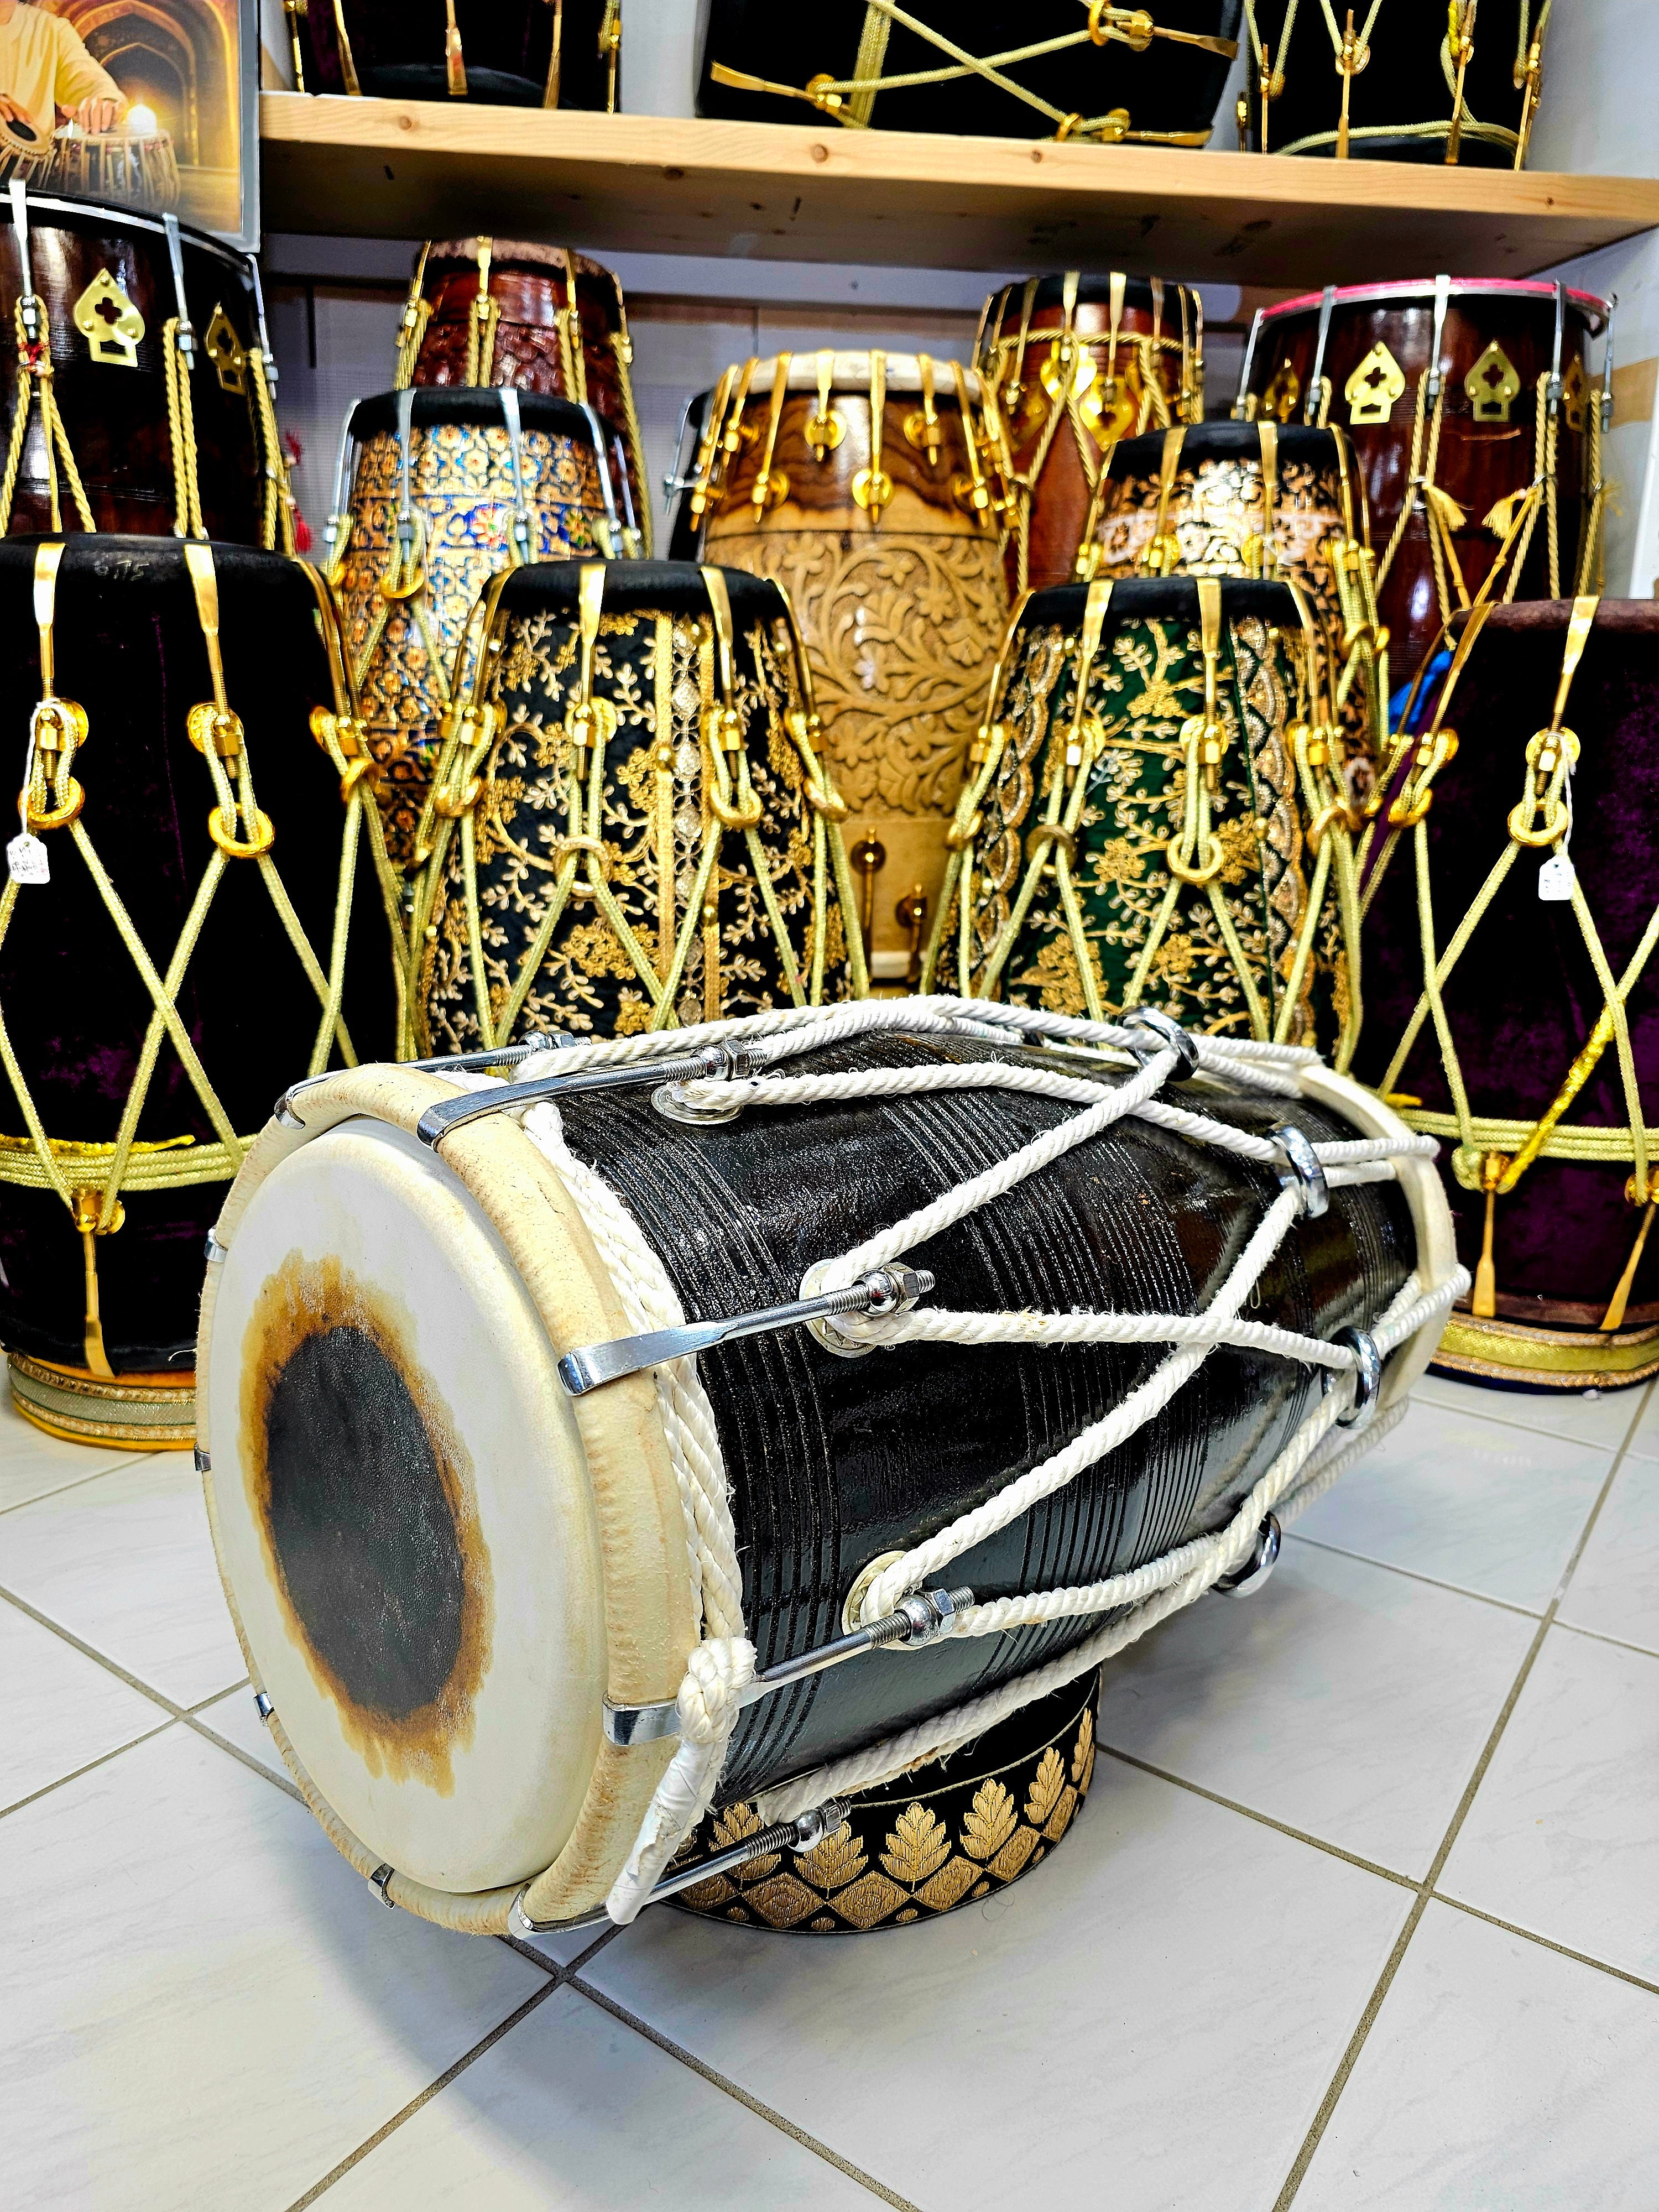 Versatile Percussion: 23" Long Black Mango Wood Professional Dholak - Hybrid Half-Roped, Half-Bolted Design